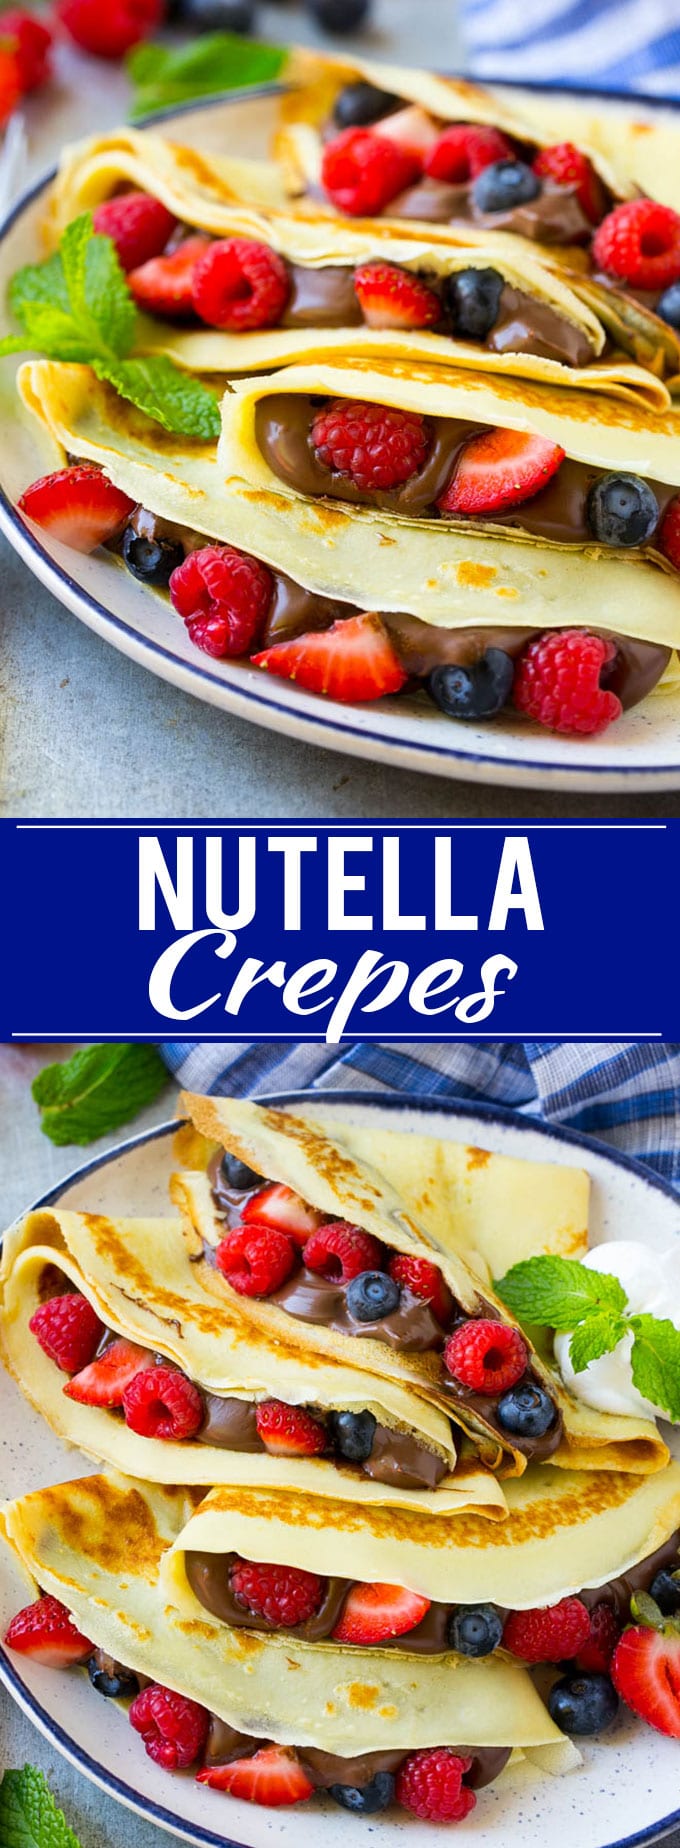 Nutella Crepes Recipe | Easy Crepes Recipe | Blender Crepes | Berry Crepes #crepes #nutella #nutellacrepes #blendercrepes #breakfast #dinneratthezoo